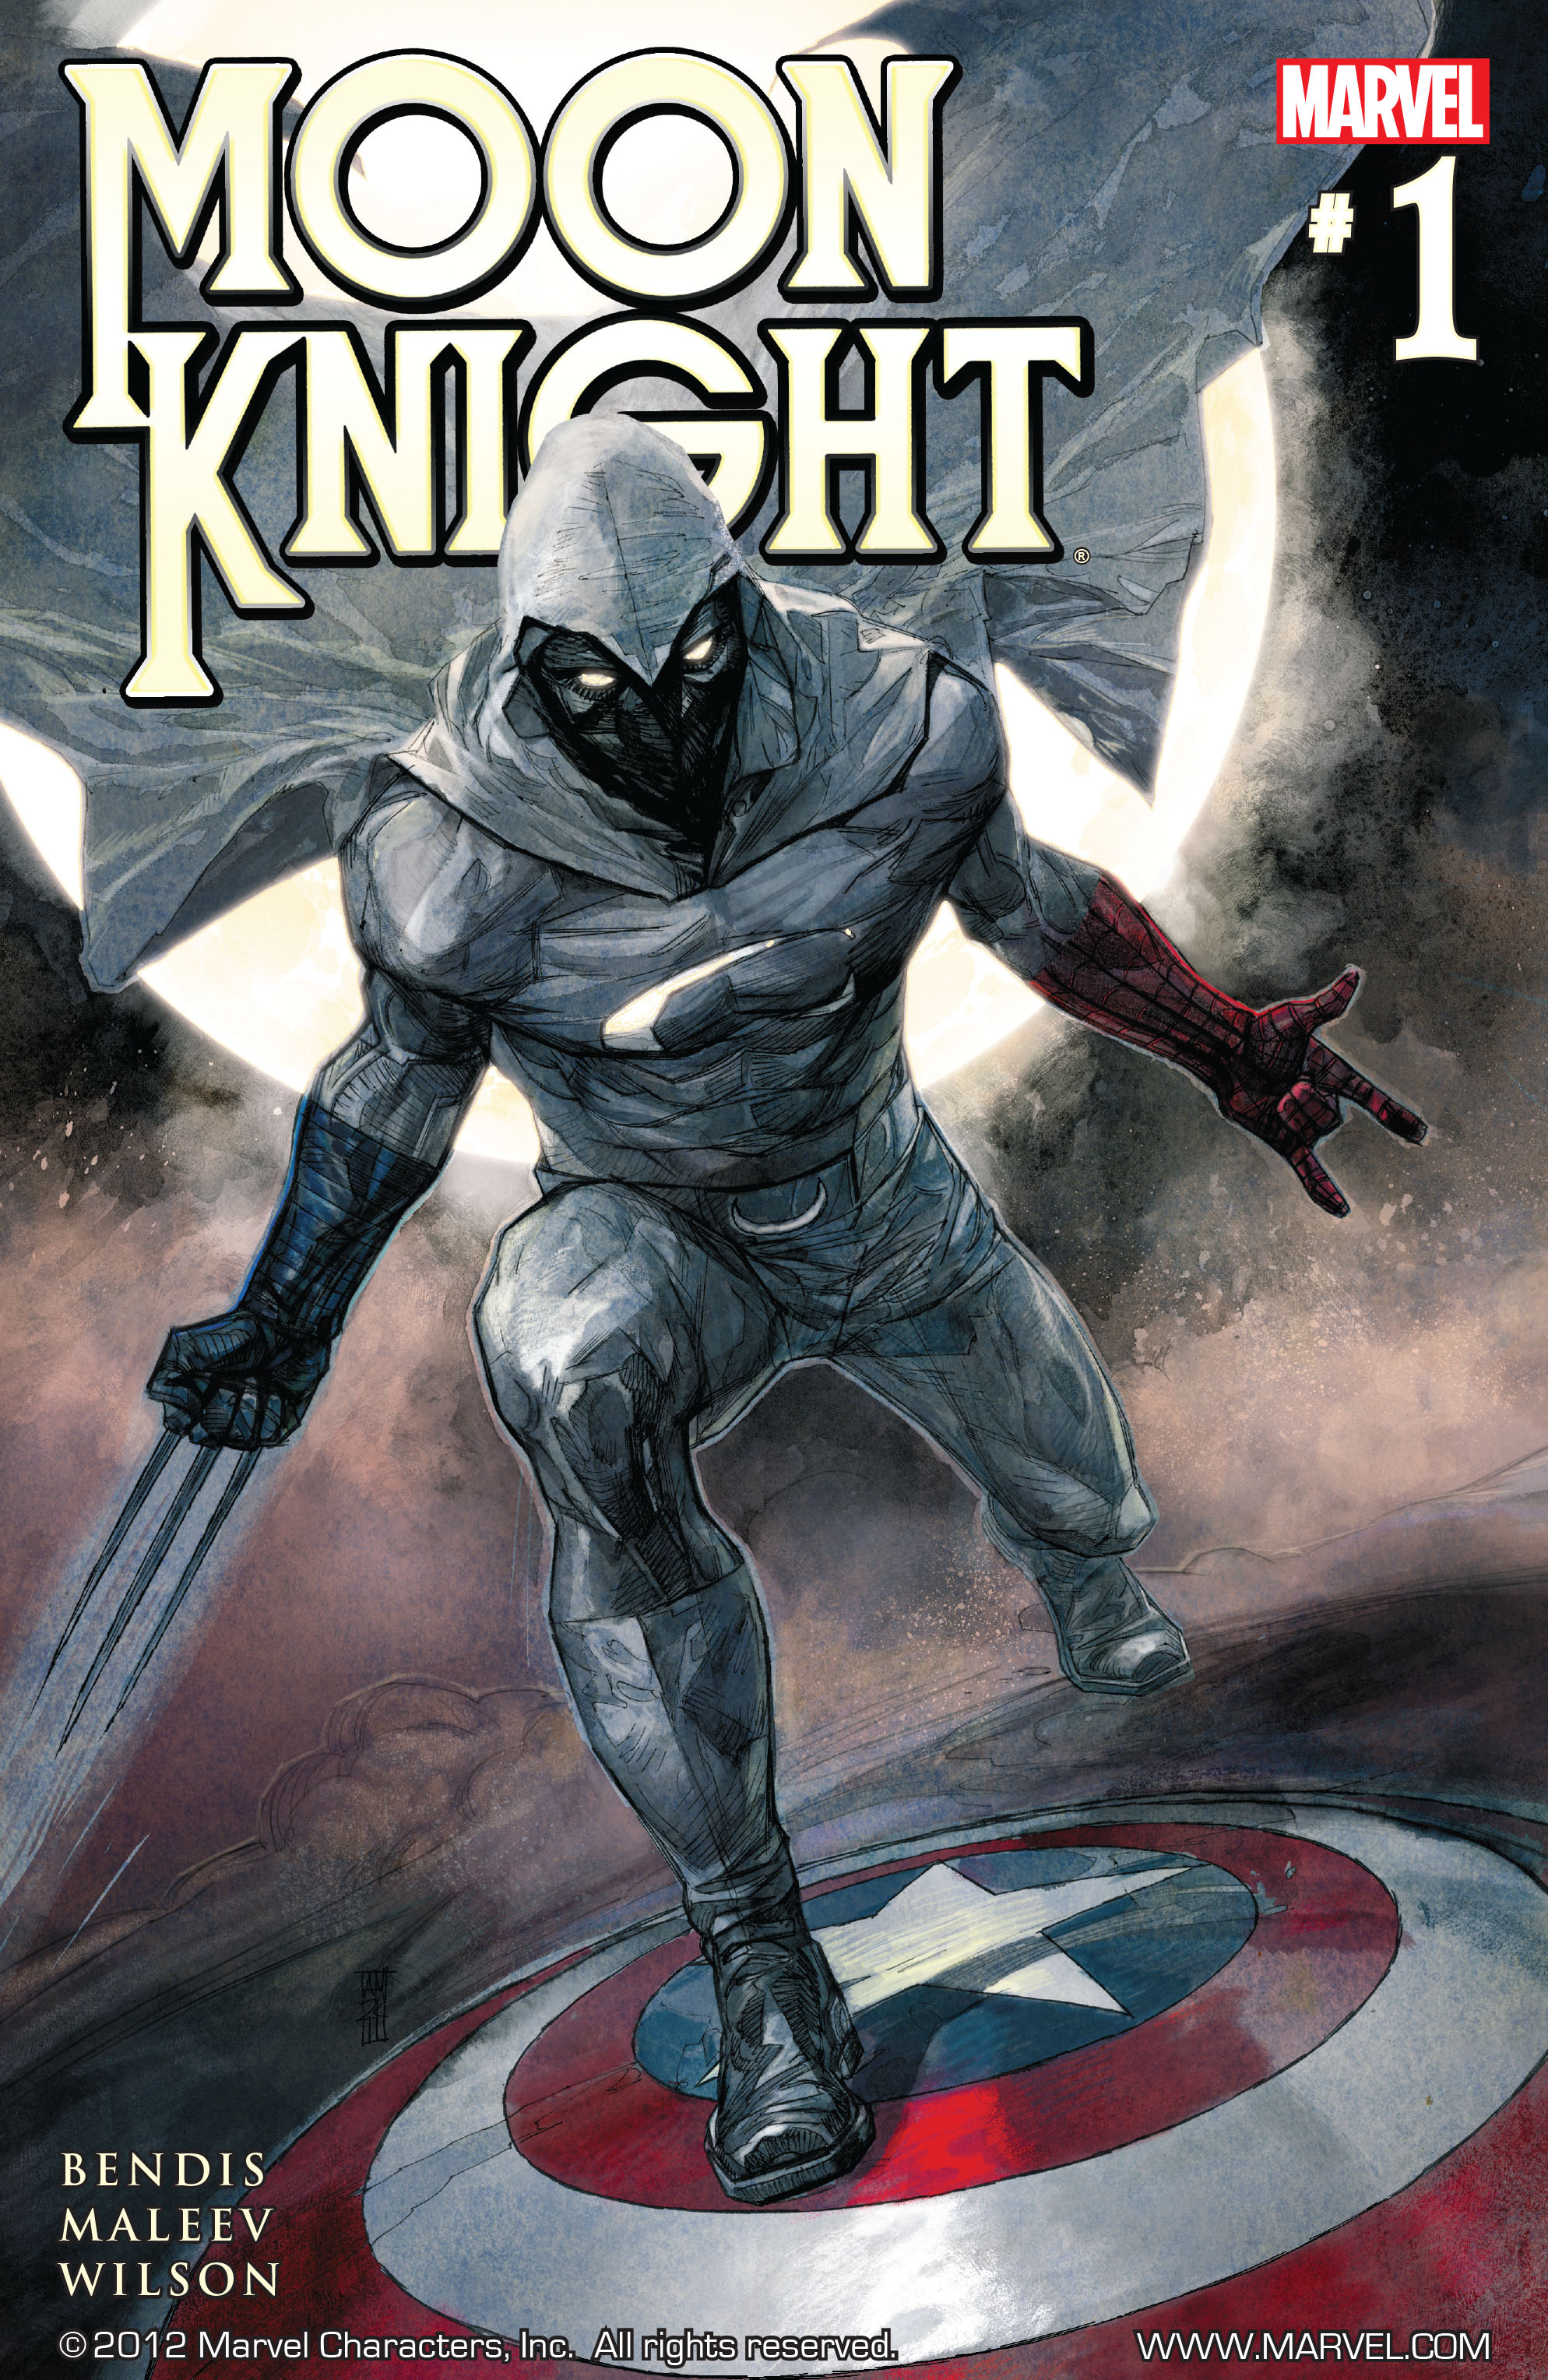 Moon knight comics free